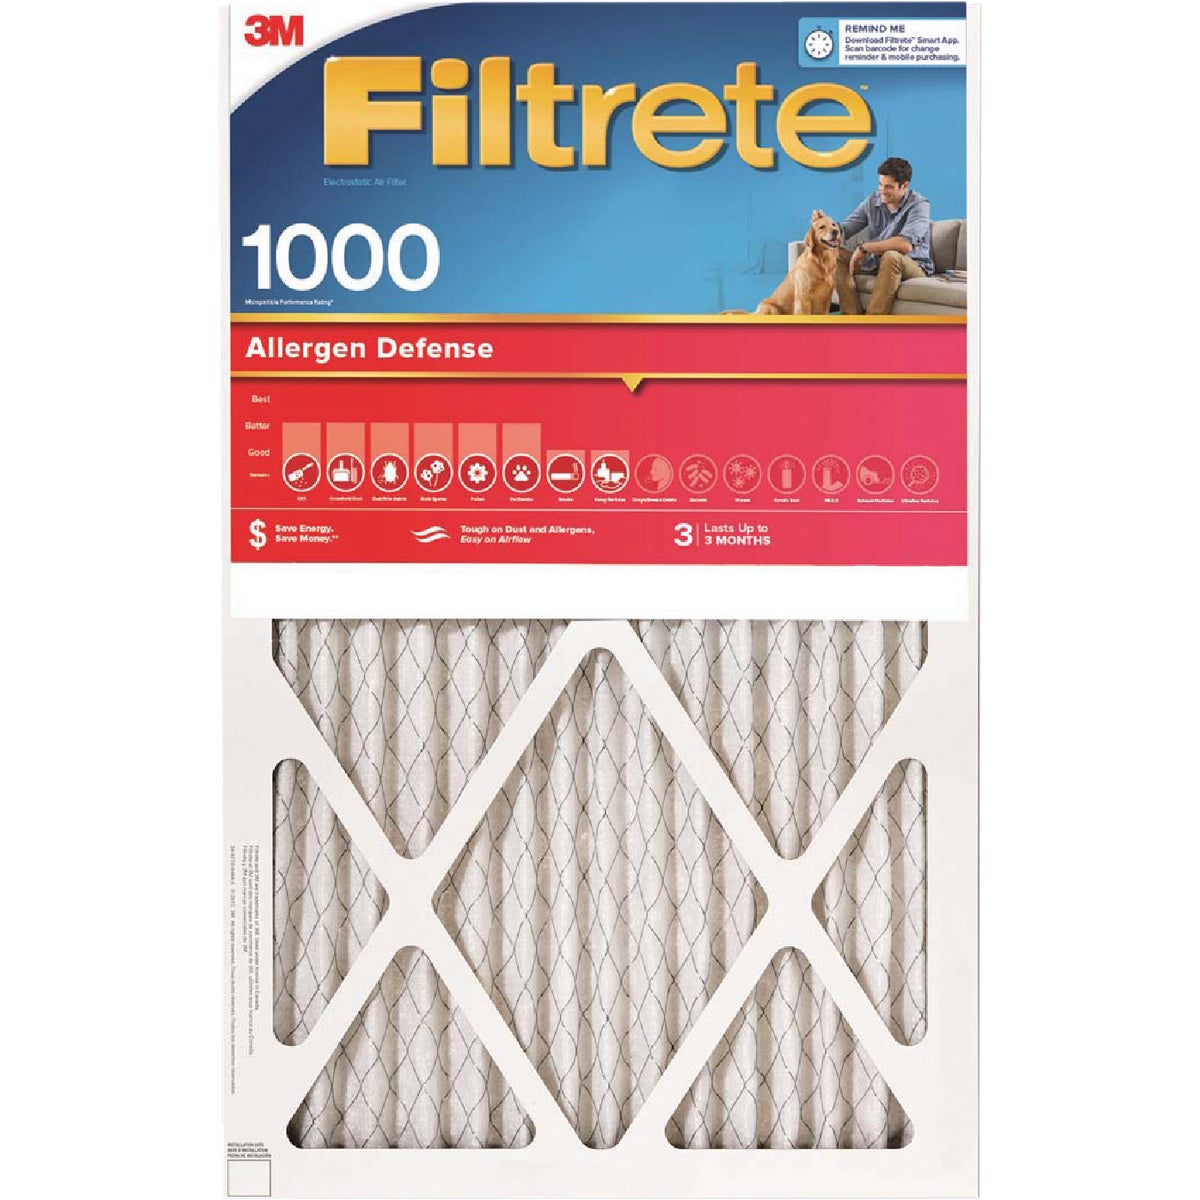 Filtrete 16 In. x 25 In. x 1 In. Allergen Defense 1000/1085 MPR Furnace Filter